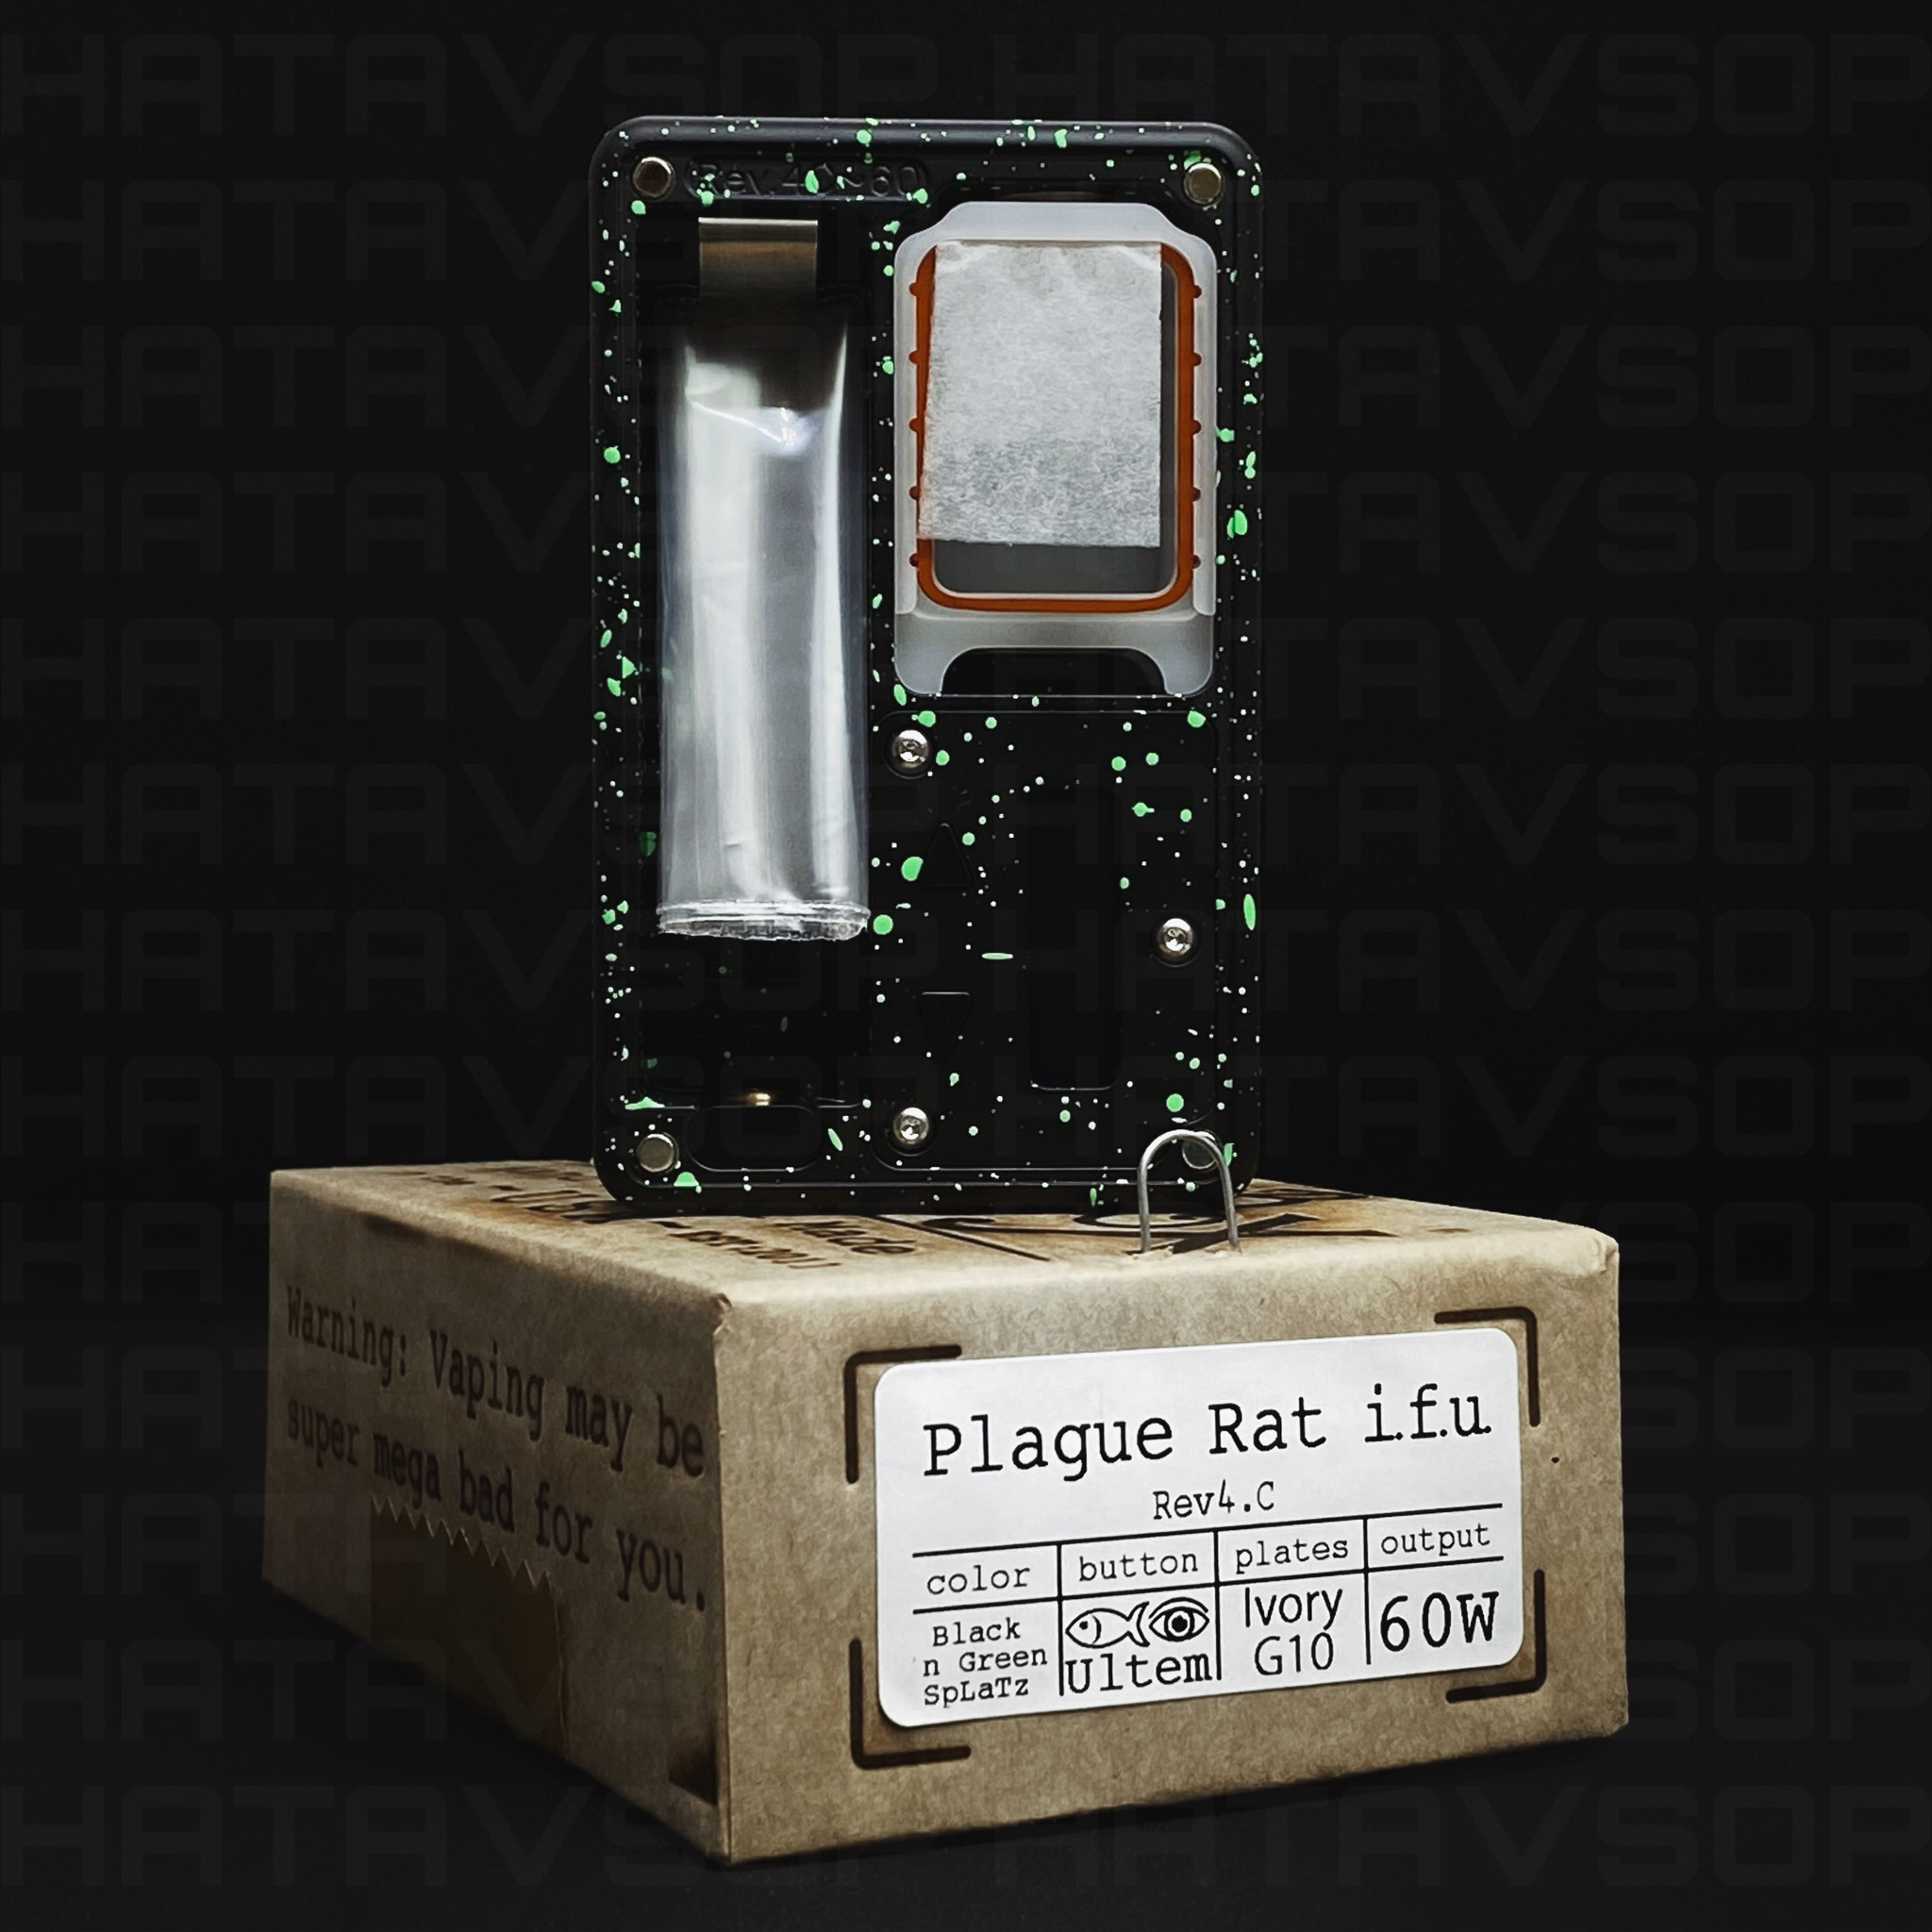 Billet Box Plague Rat i.f.u. by Billet Box Vapor | HATA V.S.O.P.